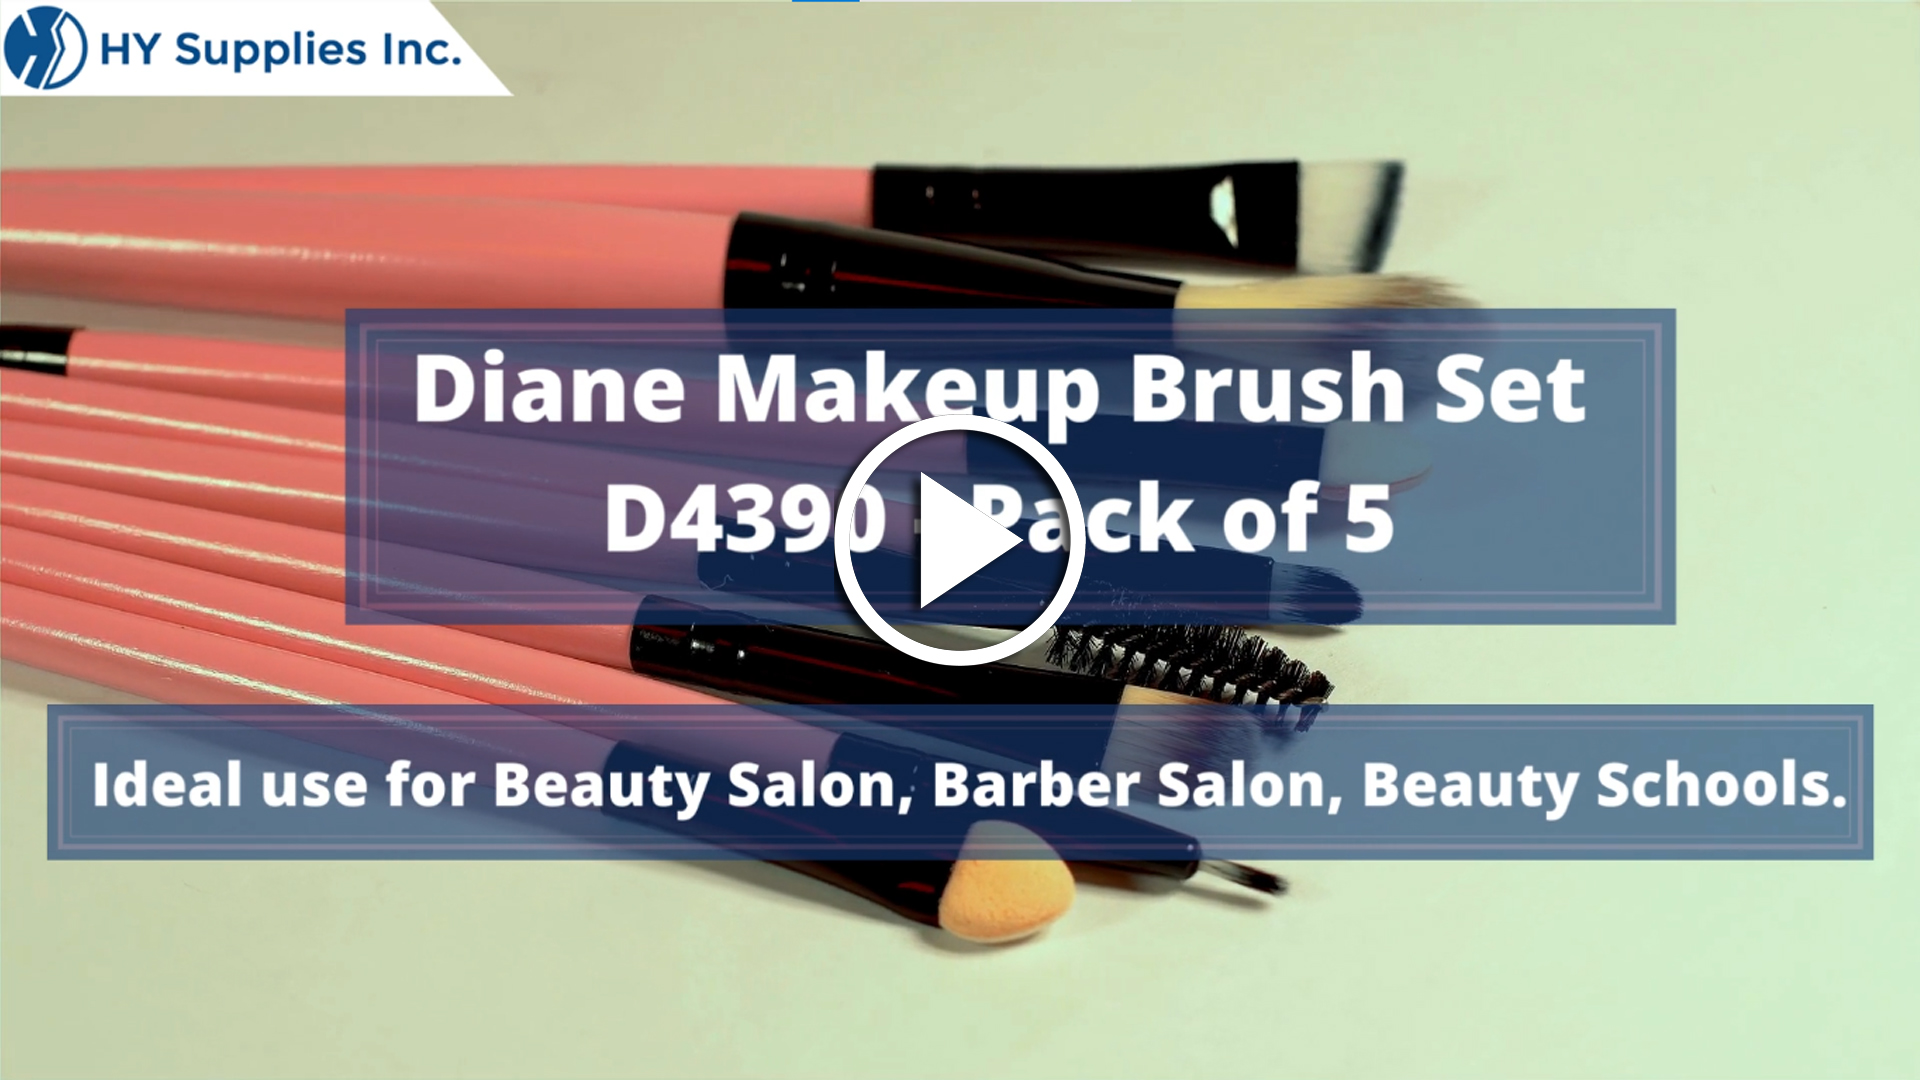 Diane Makeup Brush Set D4390 - Pack of 5